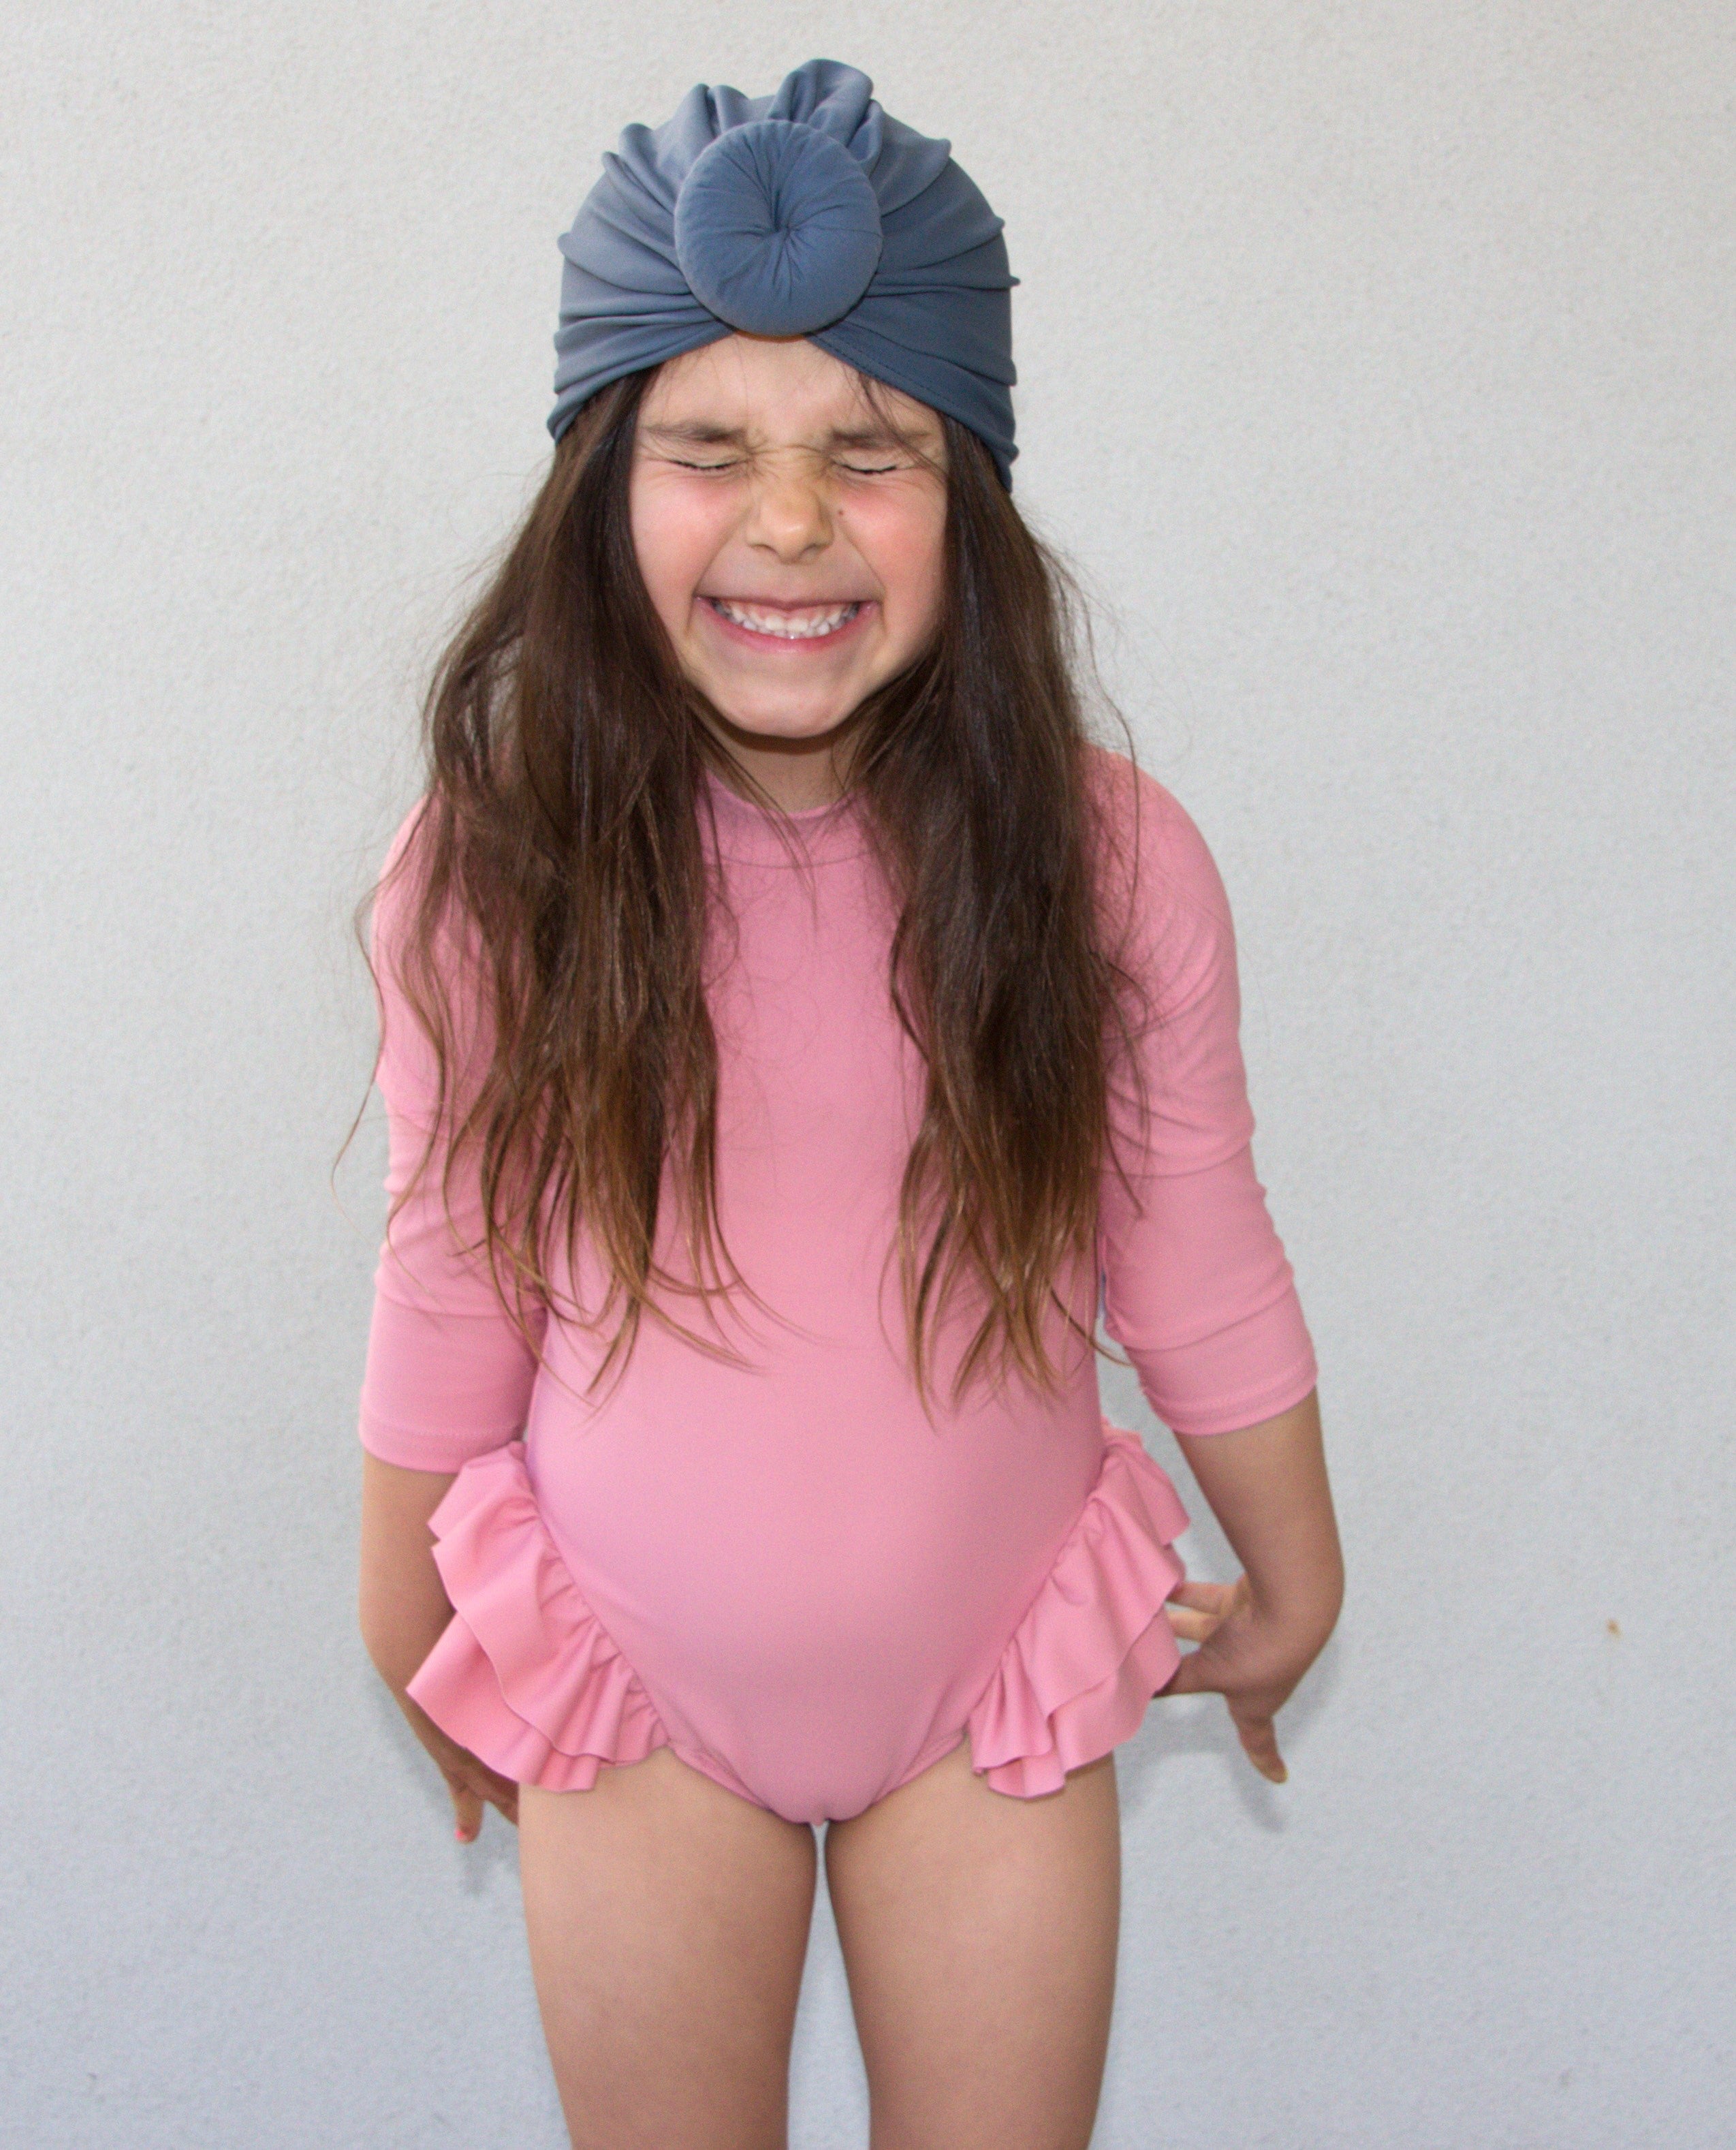 Little girl wearing prink swim suit and navy swim turban